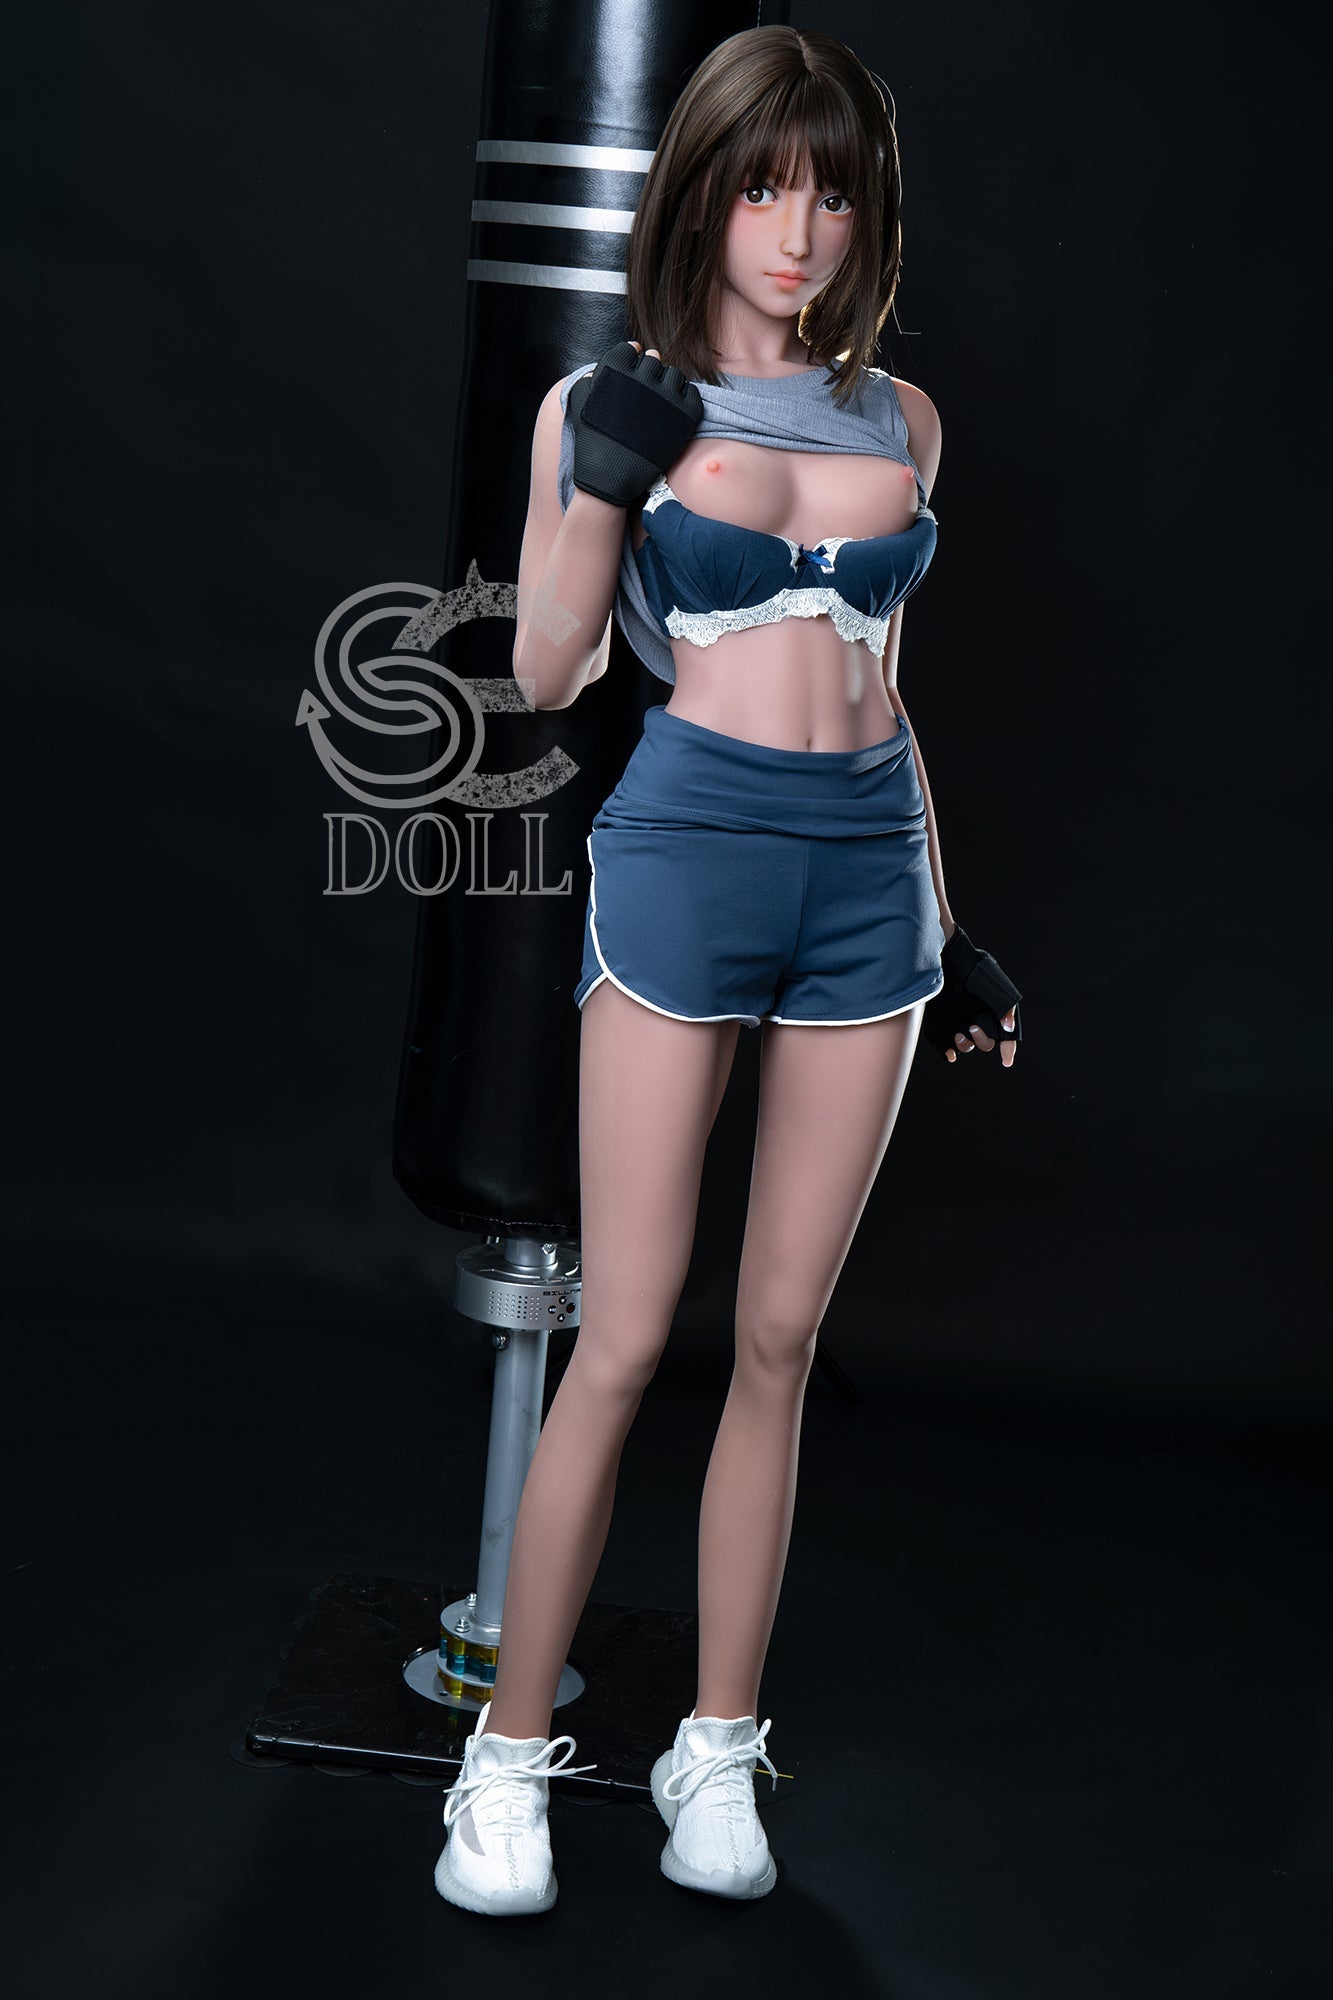 SEDOLL 166 cm C TPE - Hirono (USA) | Buy Sex Dolls at DOLLS ACTUALLY